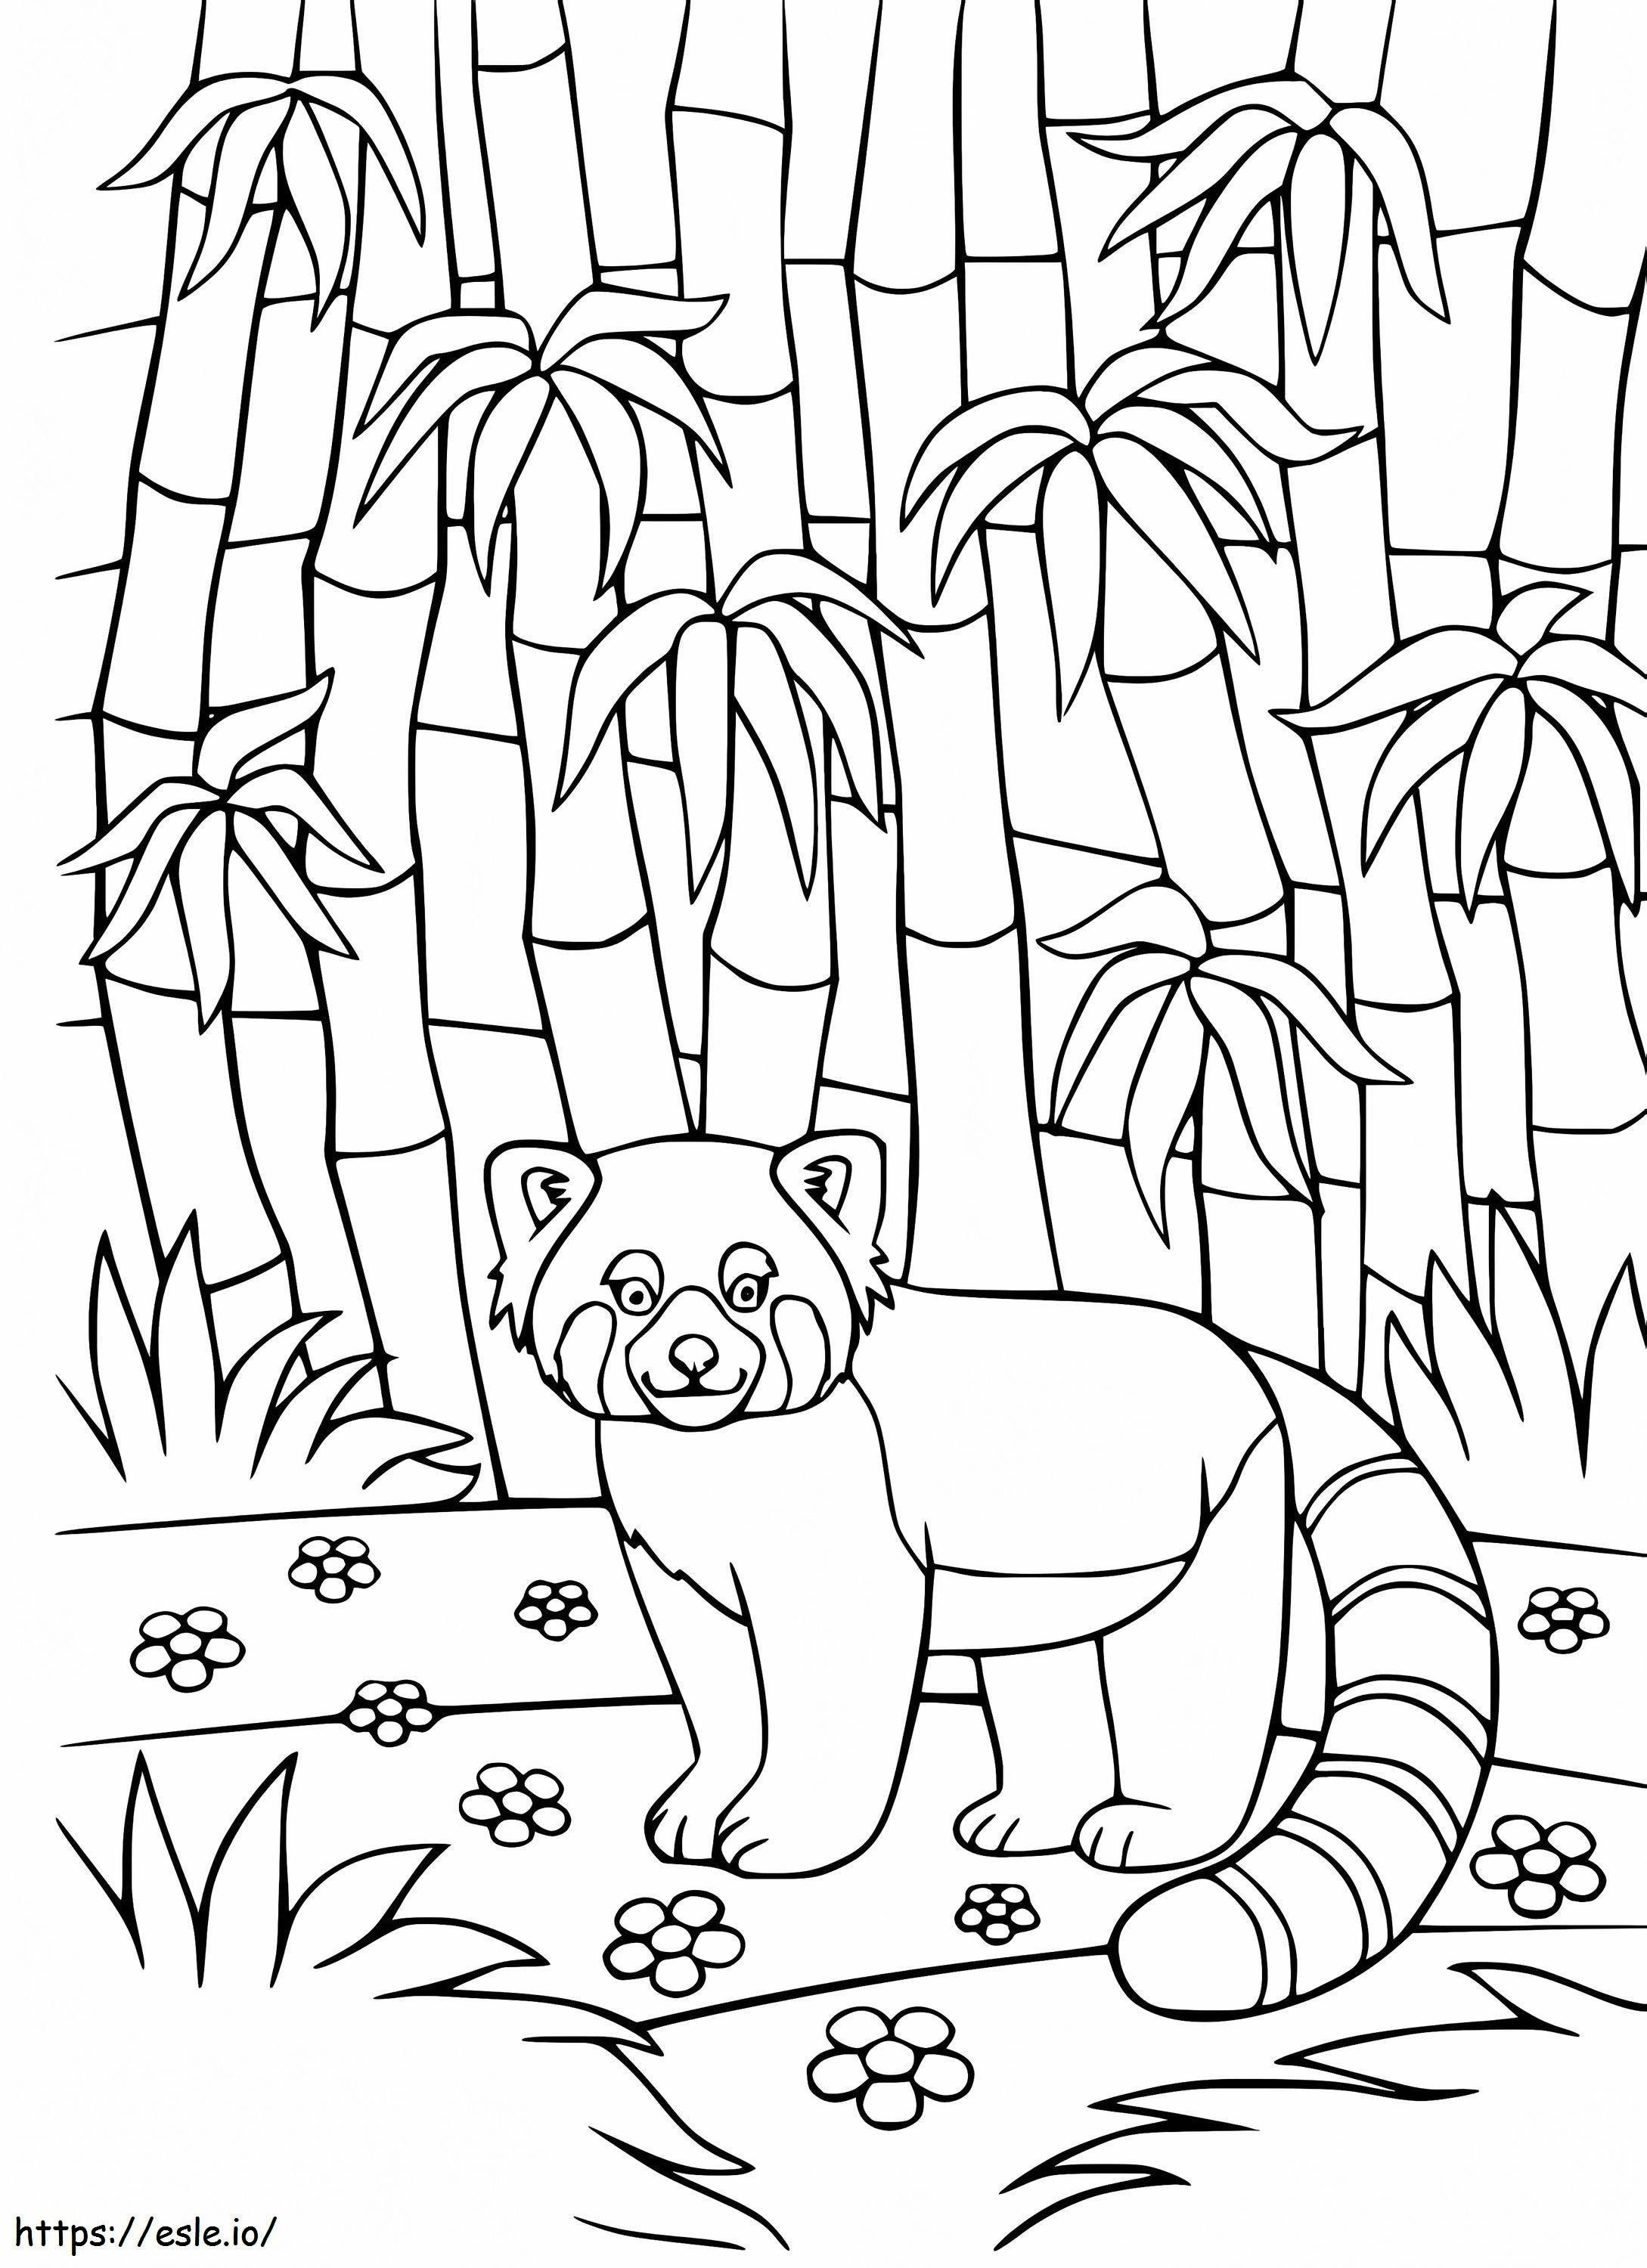 Roter Panda im Bambuswald ausmalbilder